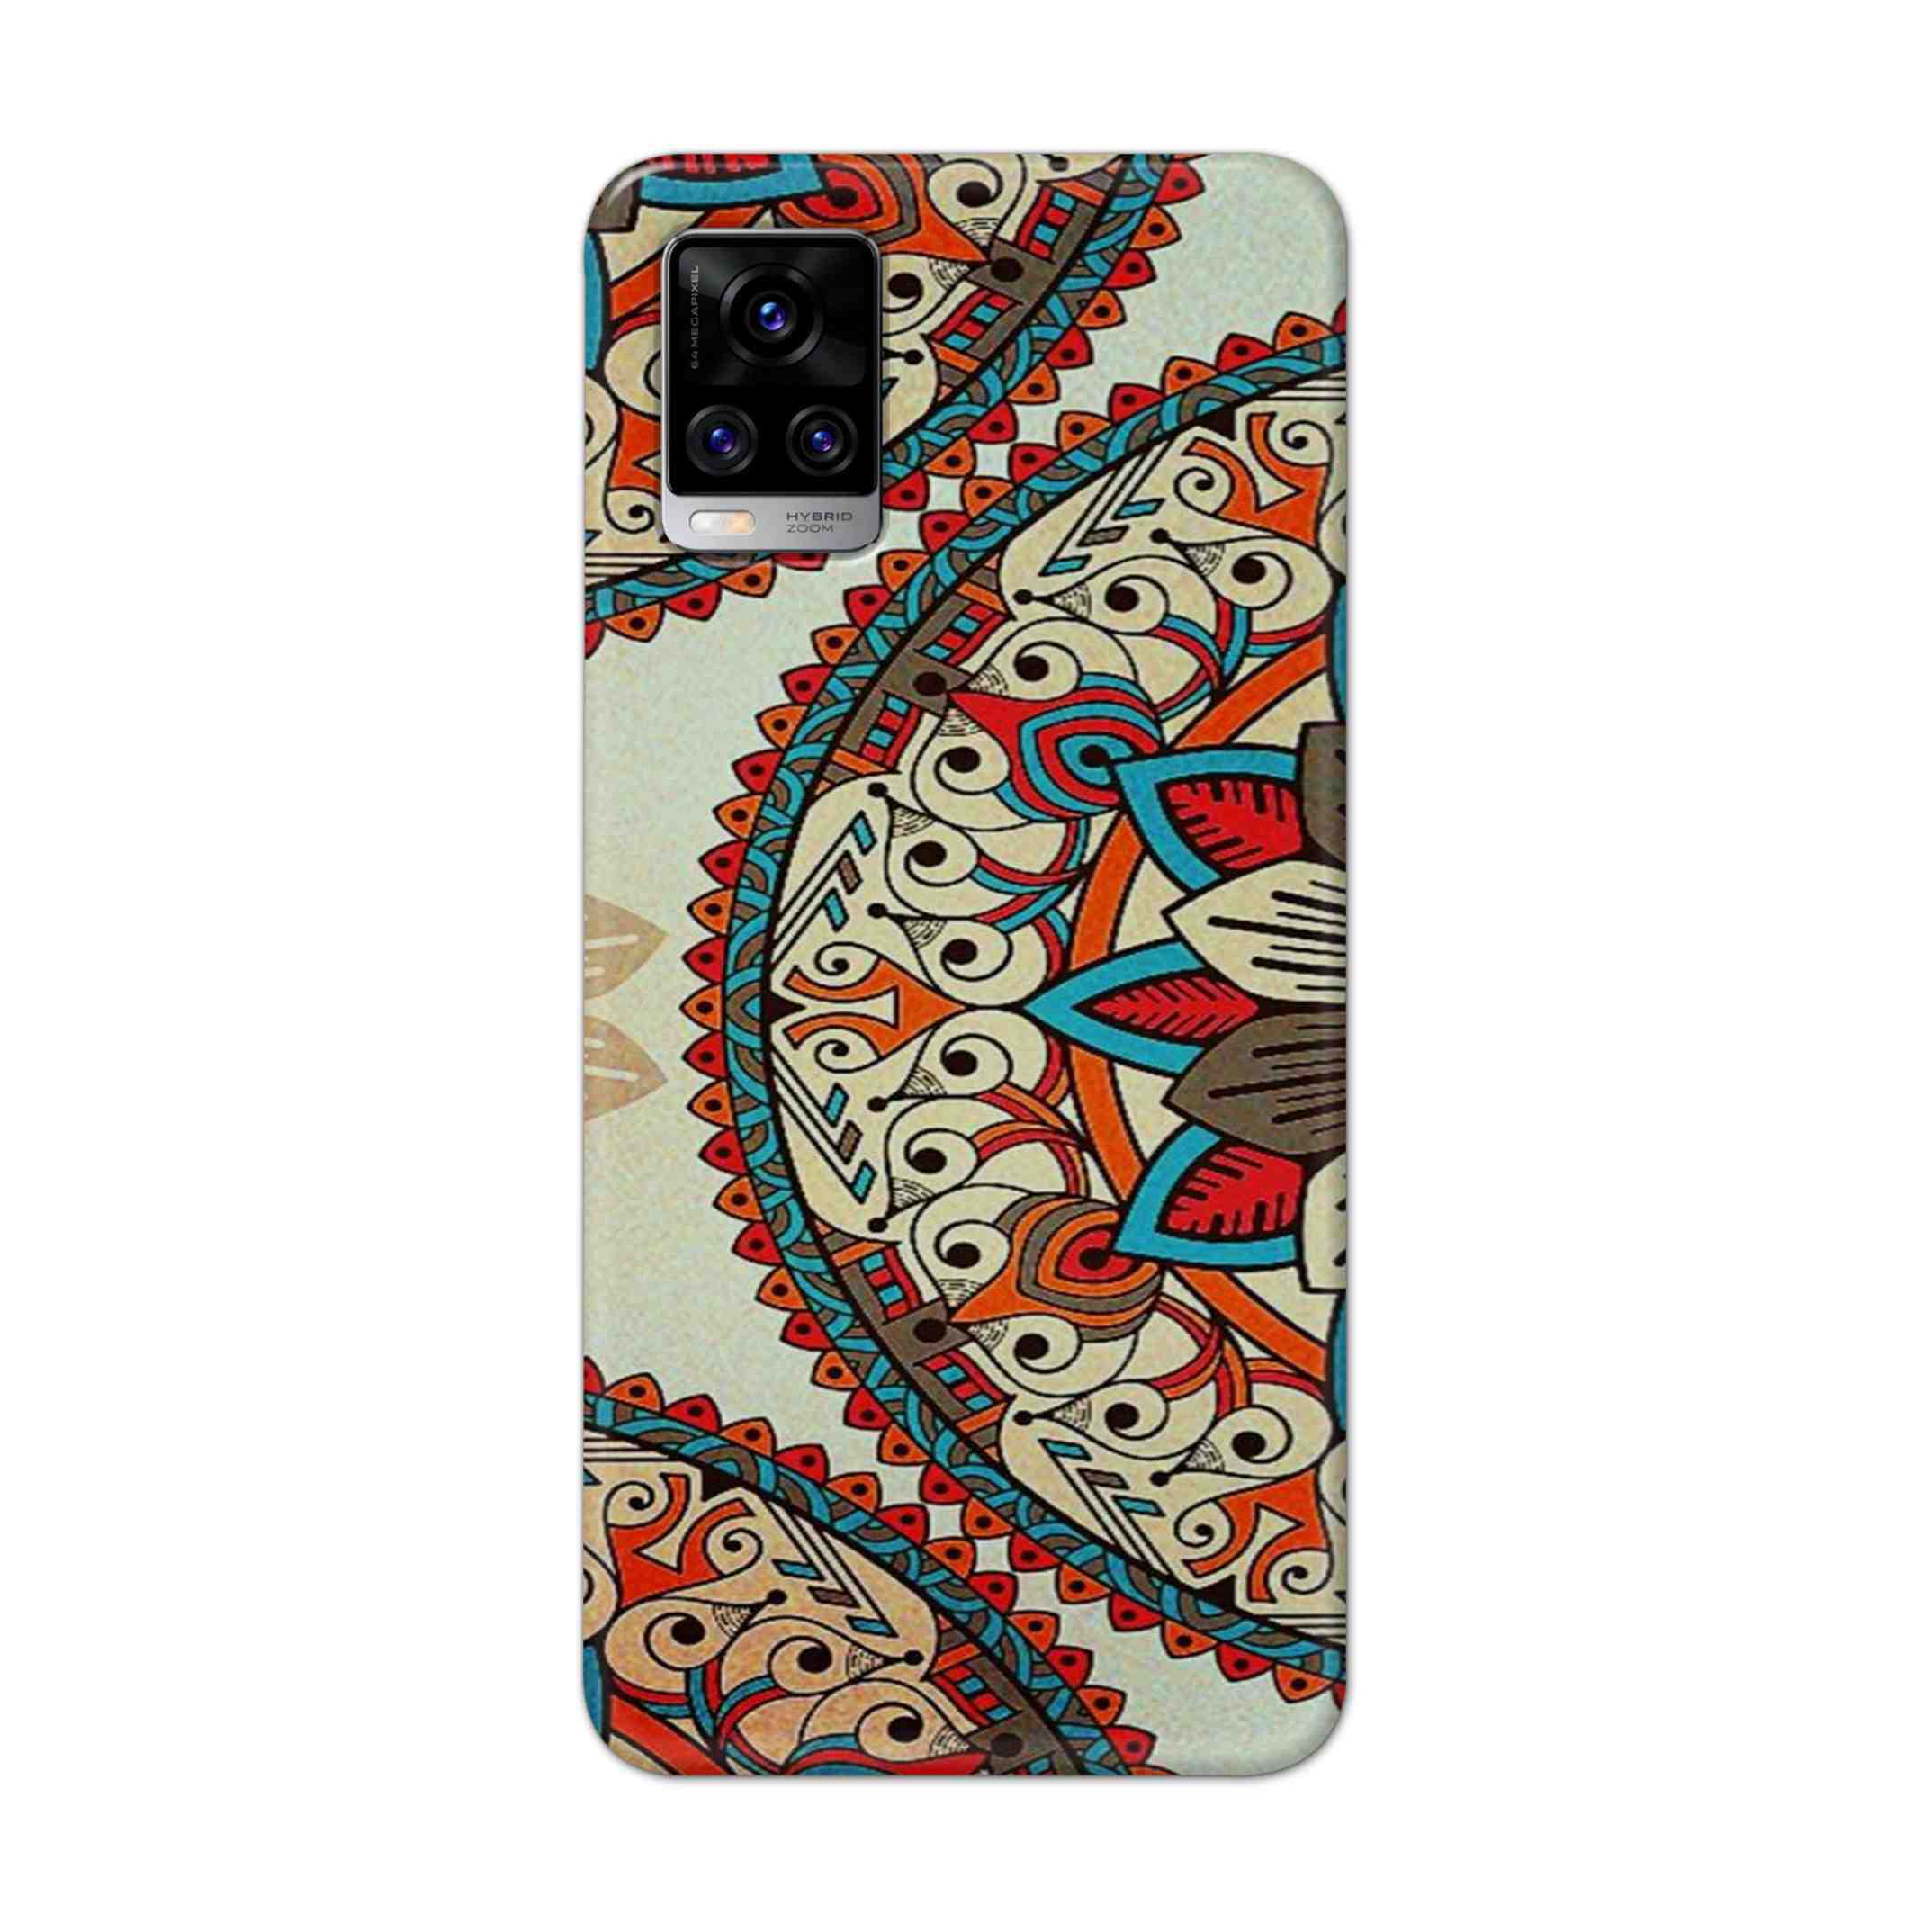 Buy Aztec Mandalas Hard Back Mobile Phone Case Cover For Vivo V20 Pro Online